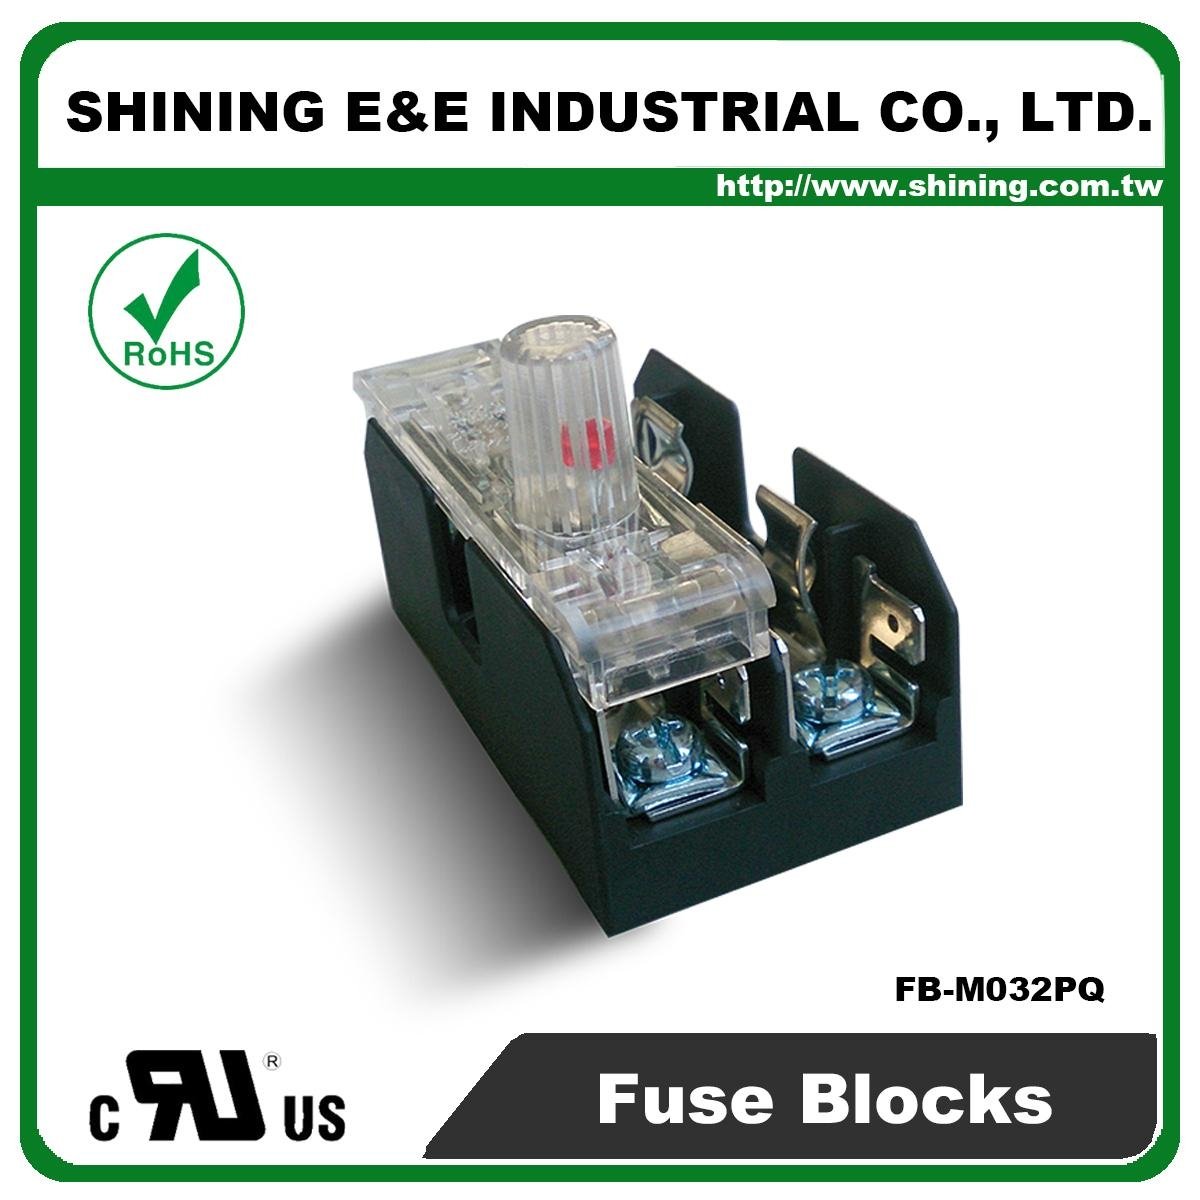 FB-M032PQ 10x38 30A 保险丝盒 Fuse Block 5